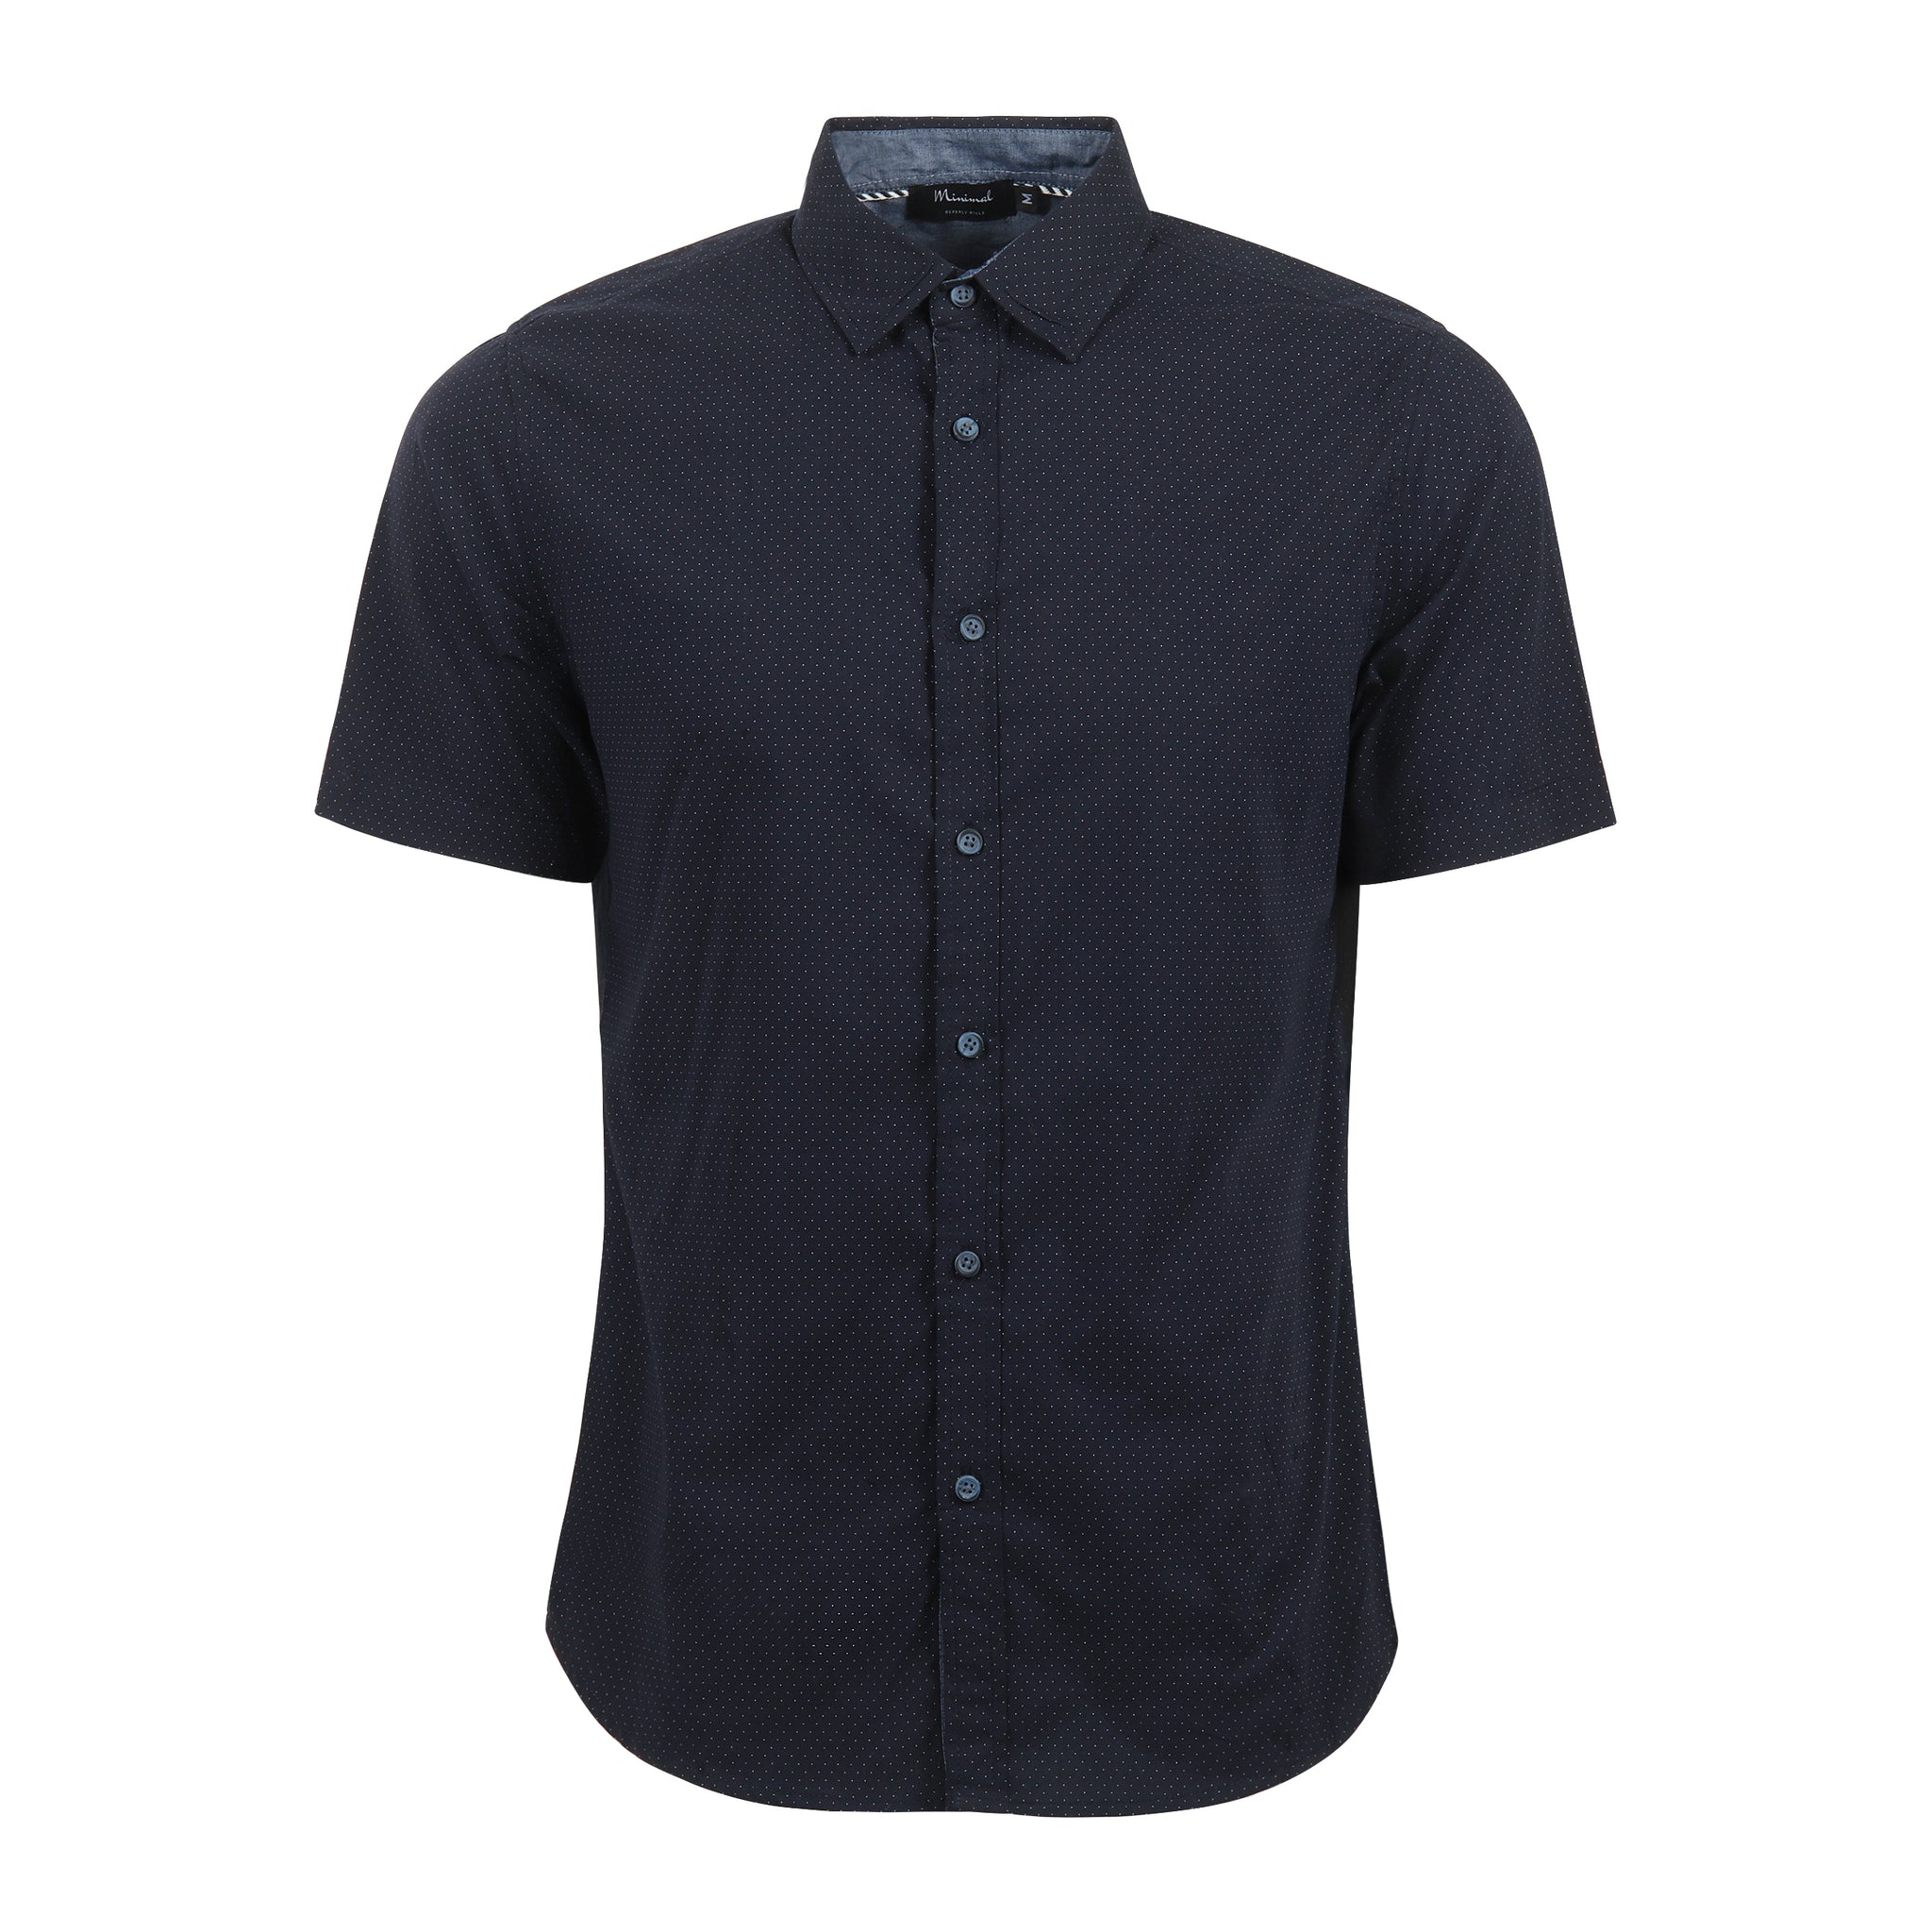 The Minimal Venice  Premium Men's Button Down Shirt